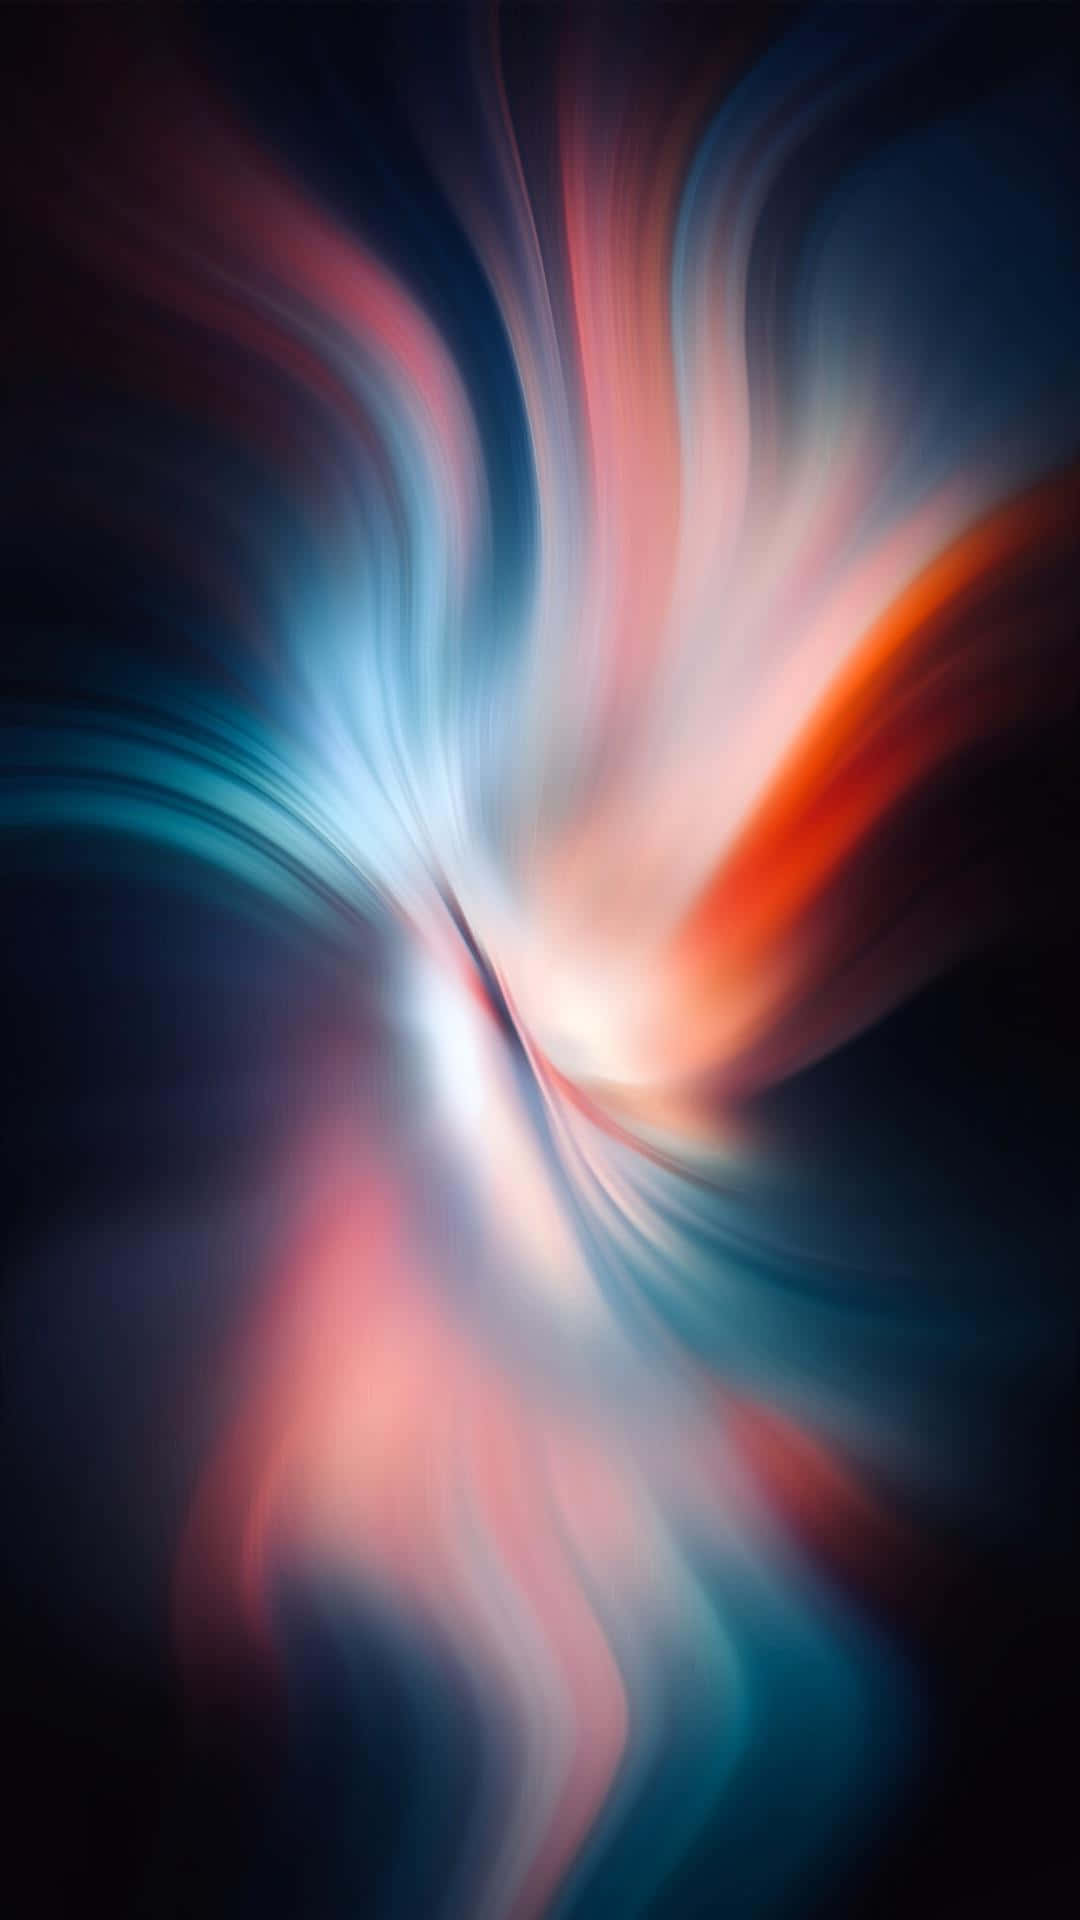 Iphone X Abstract Fluid Light Explosion Wallpaper